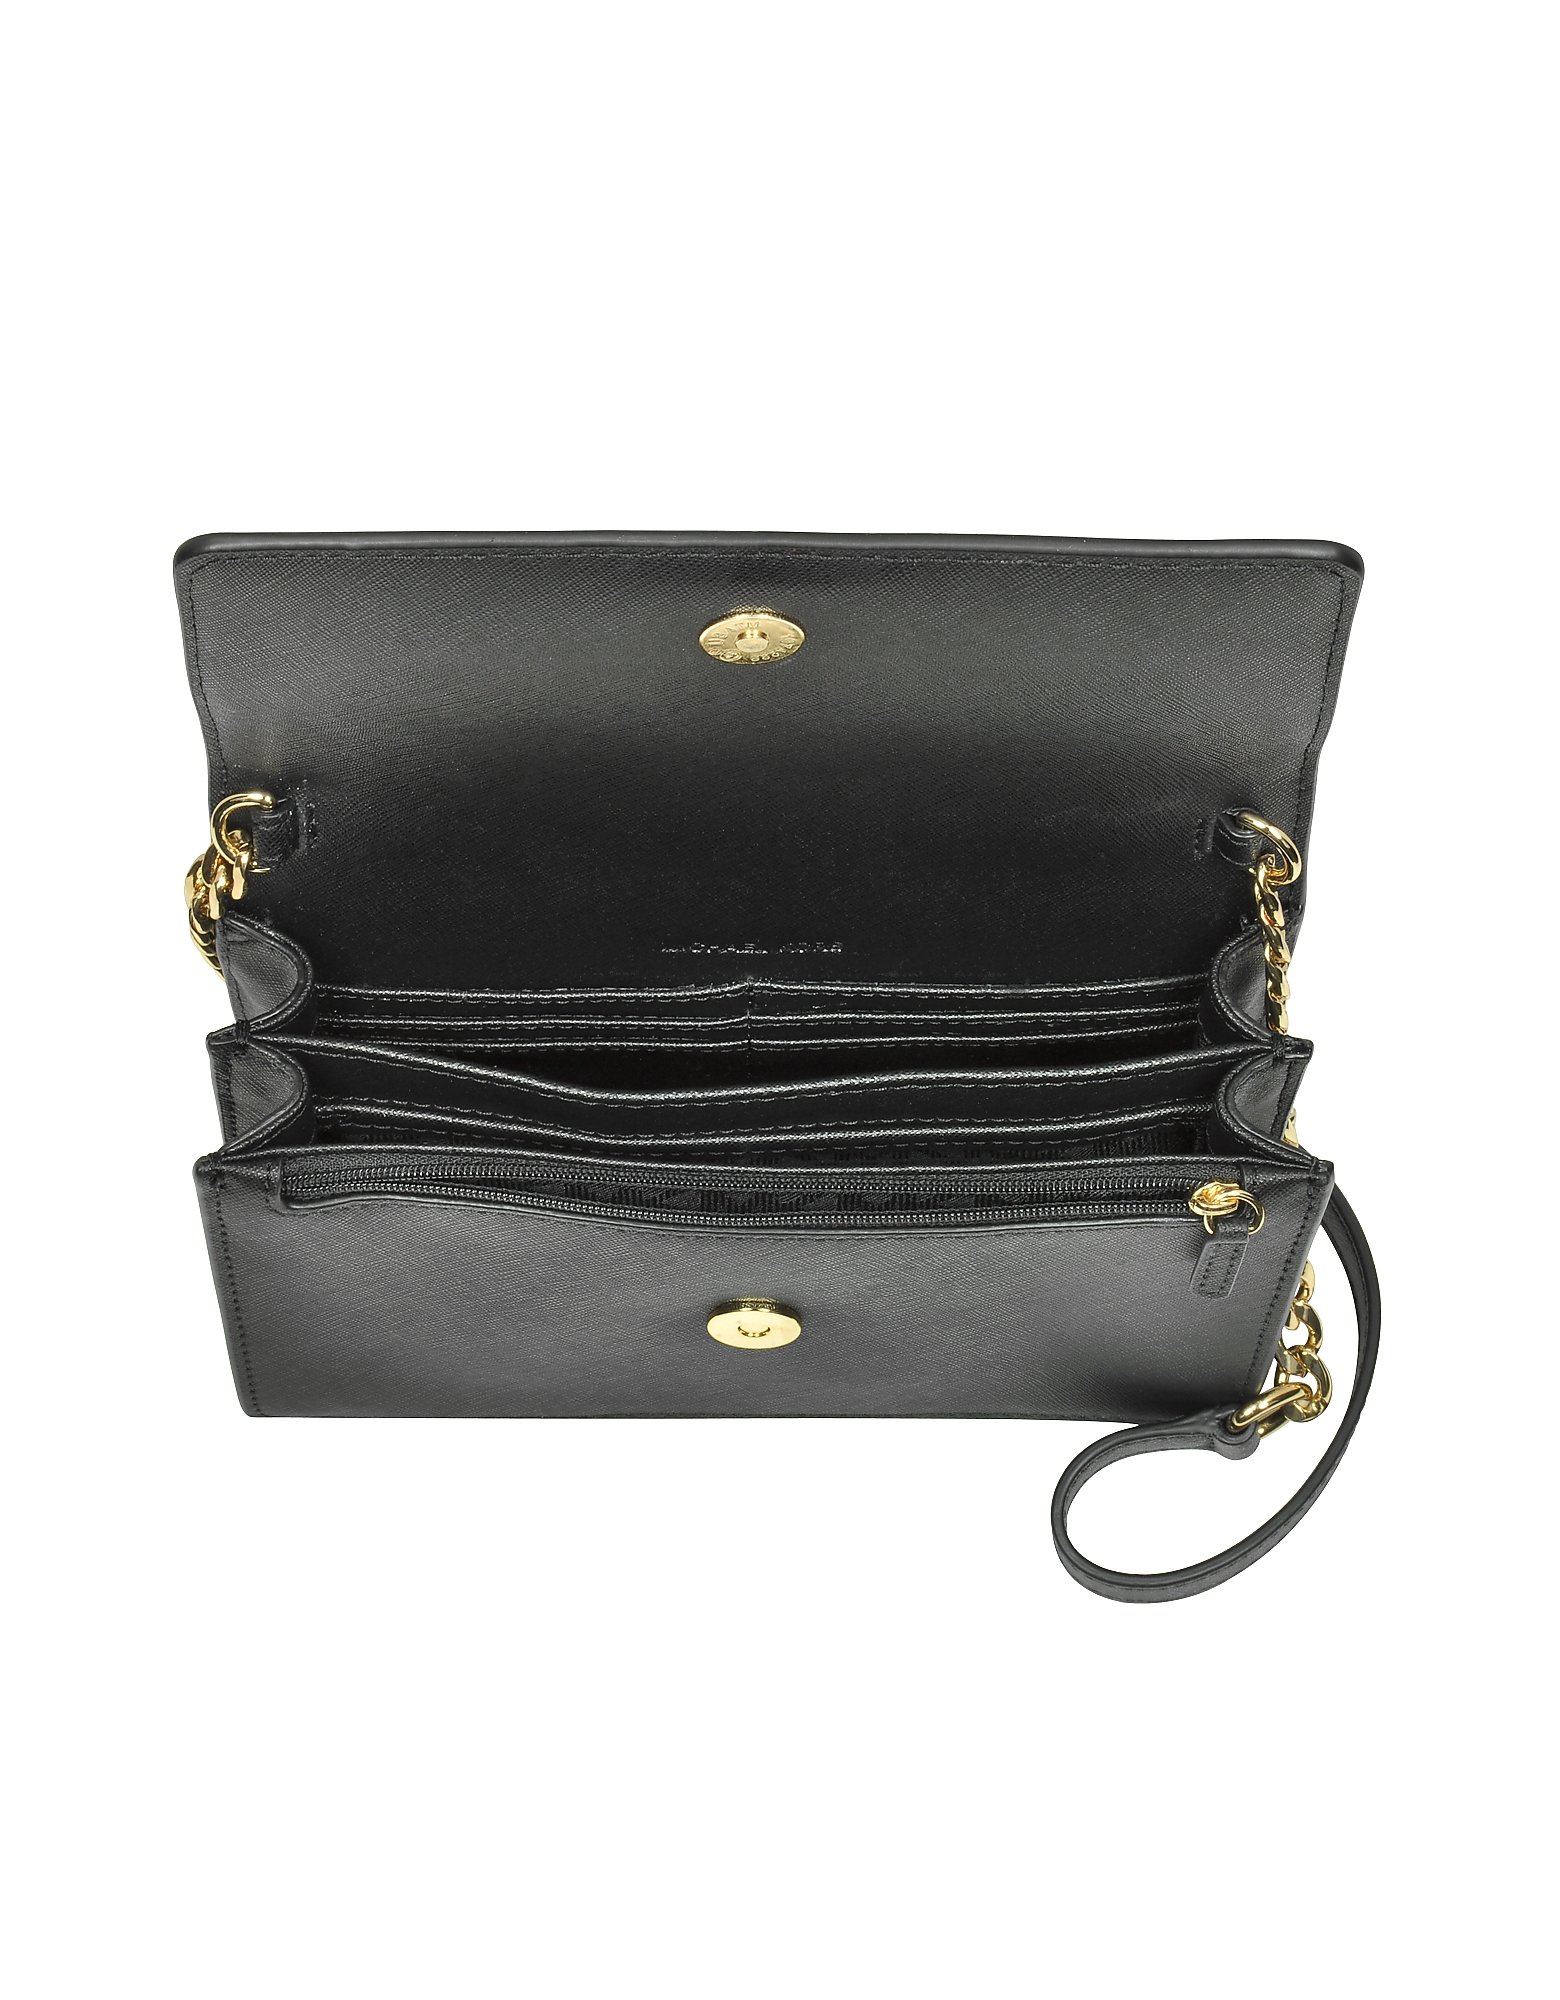 Michael Kors Daniela Small Saffiano Leather Crossbody Bag in Black - Lyst